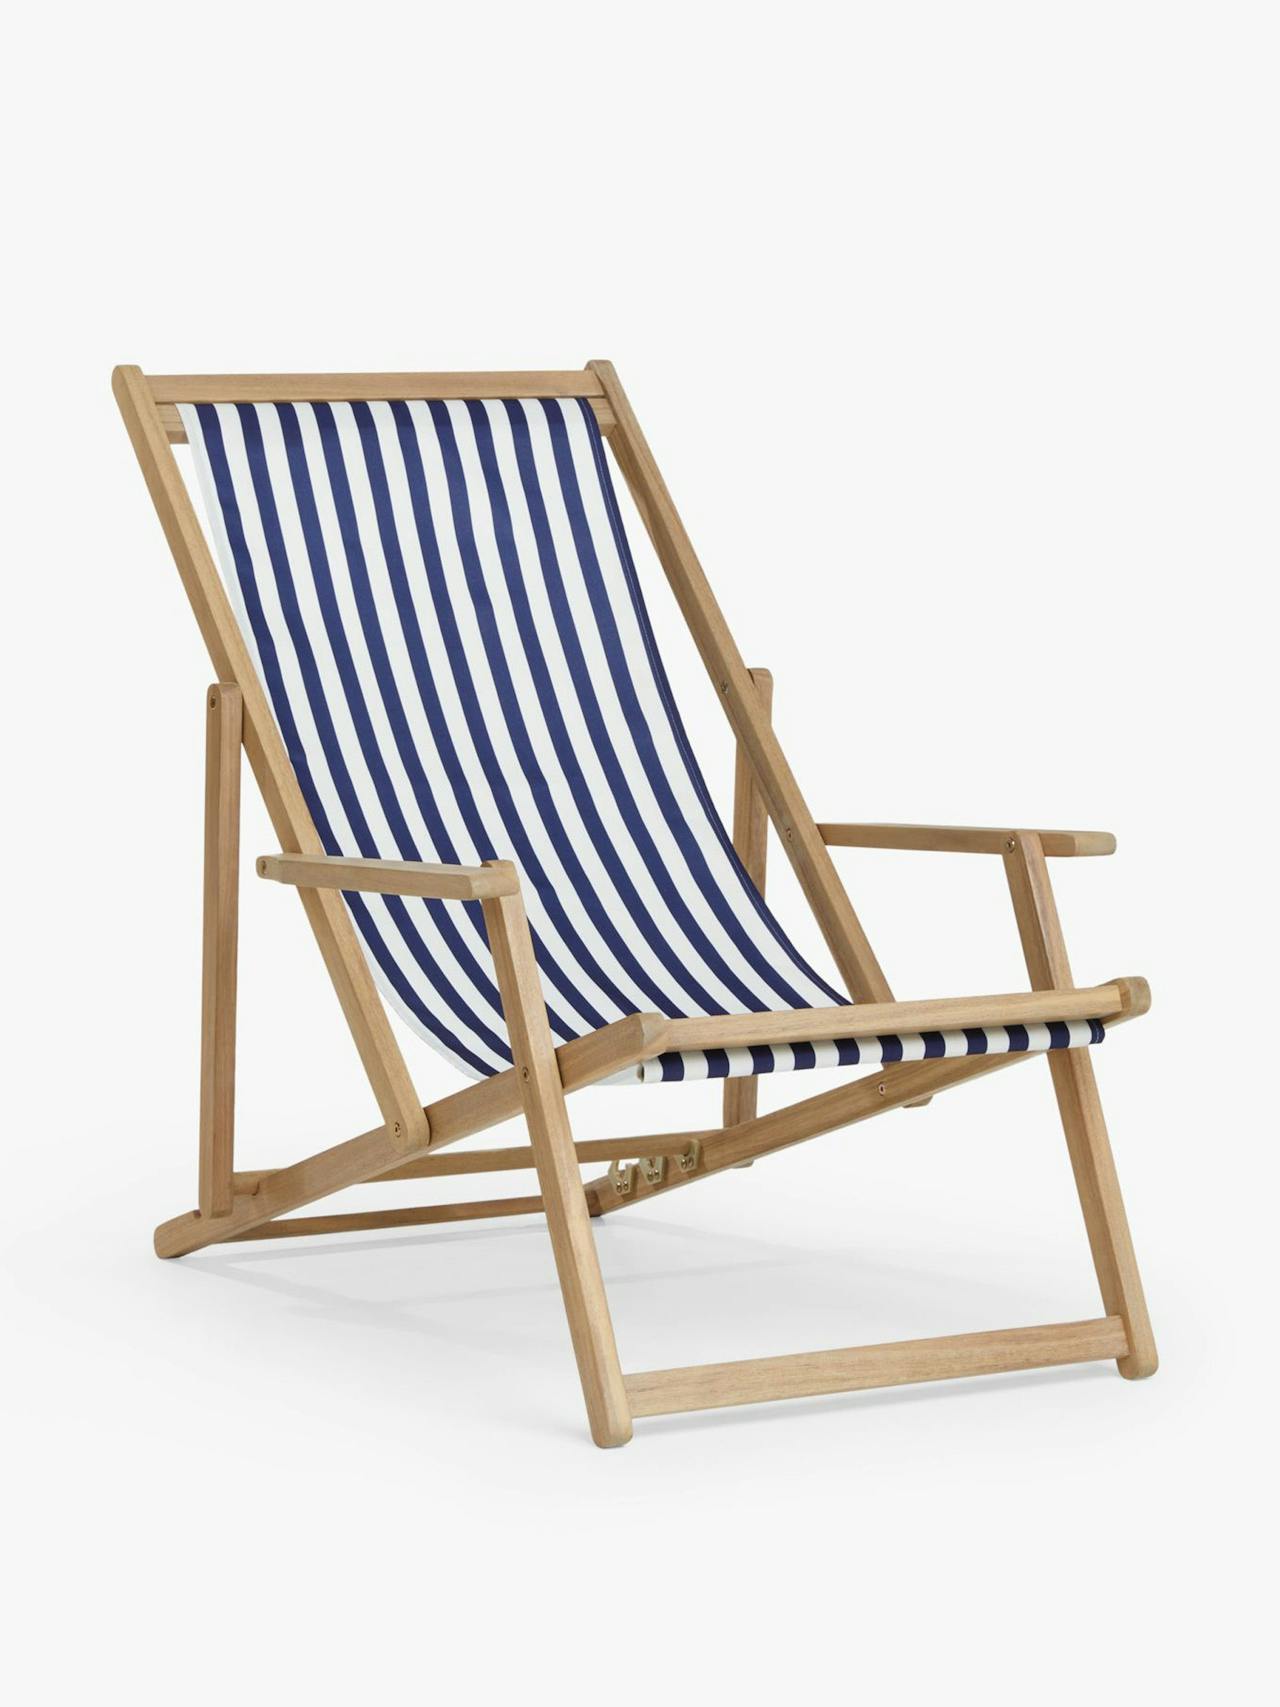 Acacia wood deck chair frame & striped sling